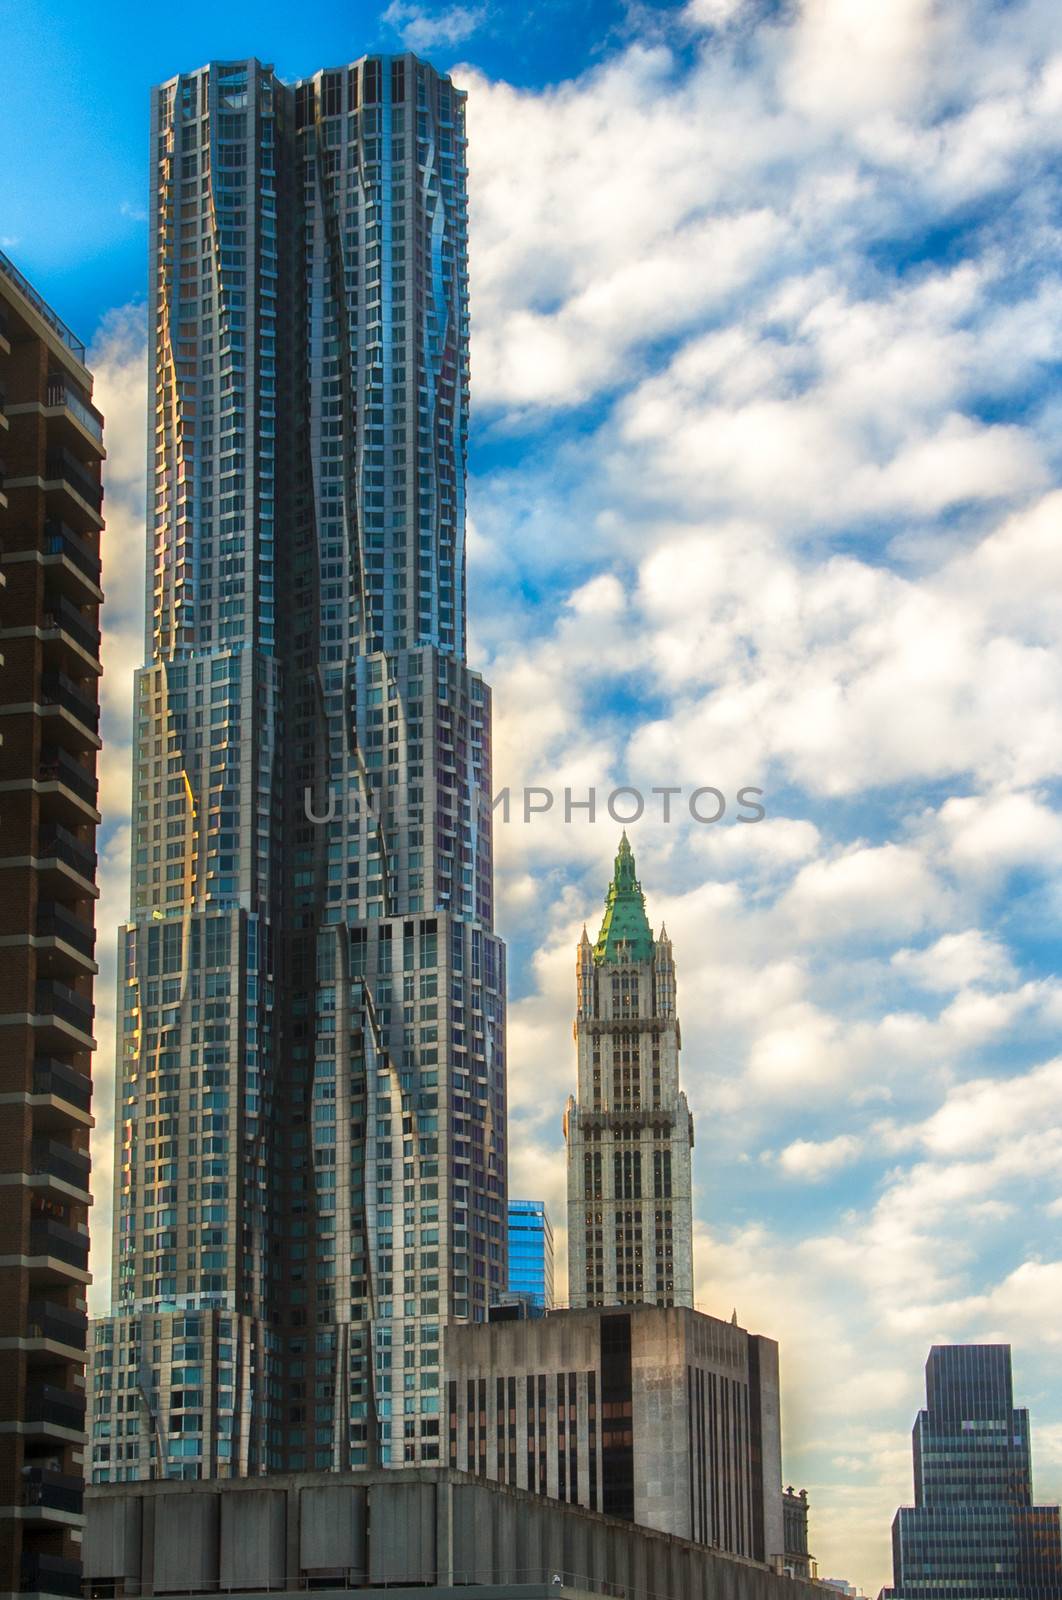 Beekman Tower in Manhattan, New York City, New York State, USA